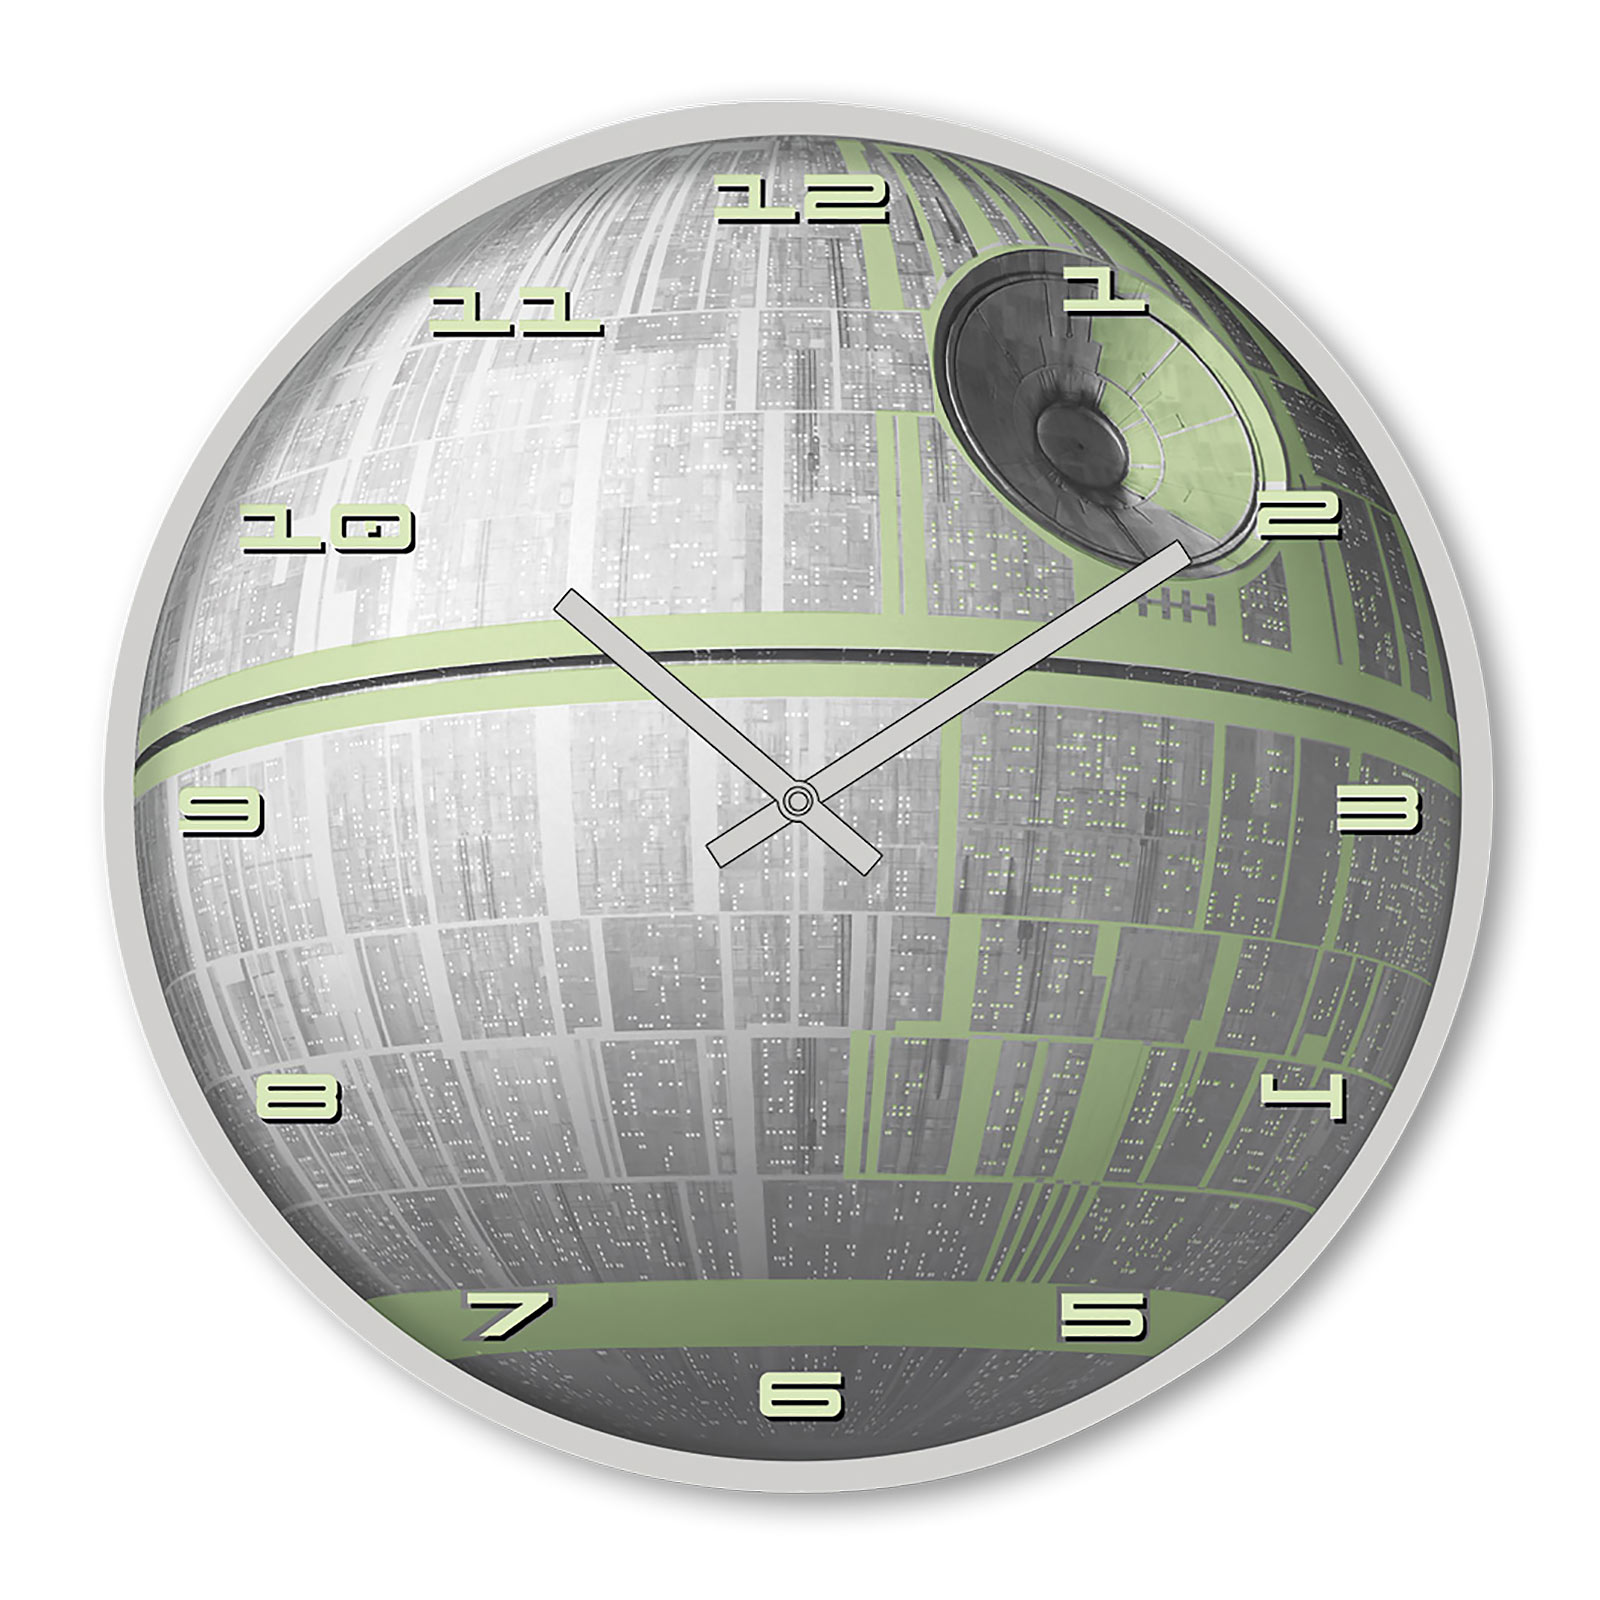 Star Wars - Death Star Glow in the Dark Wall Clock